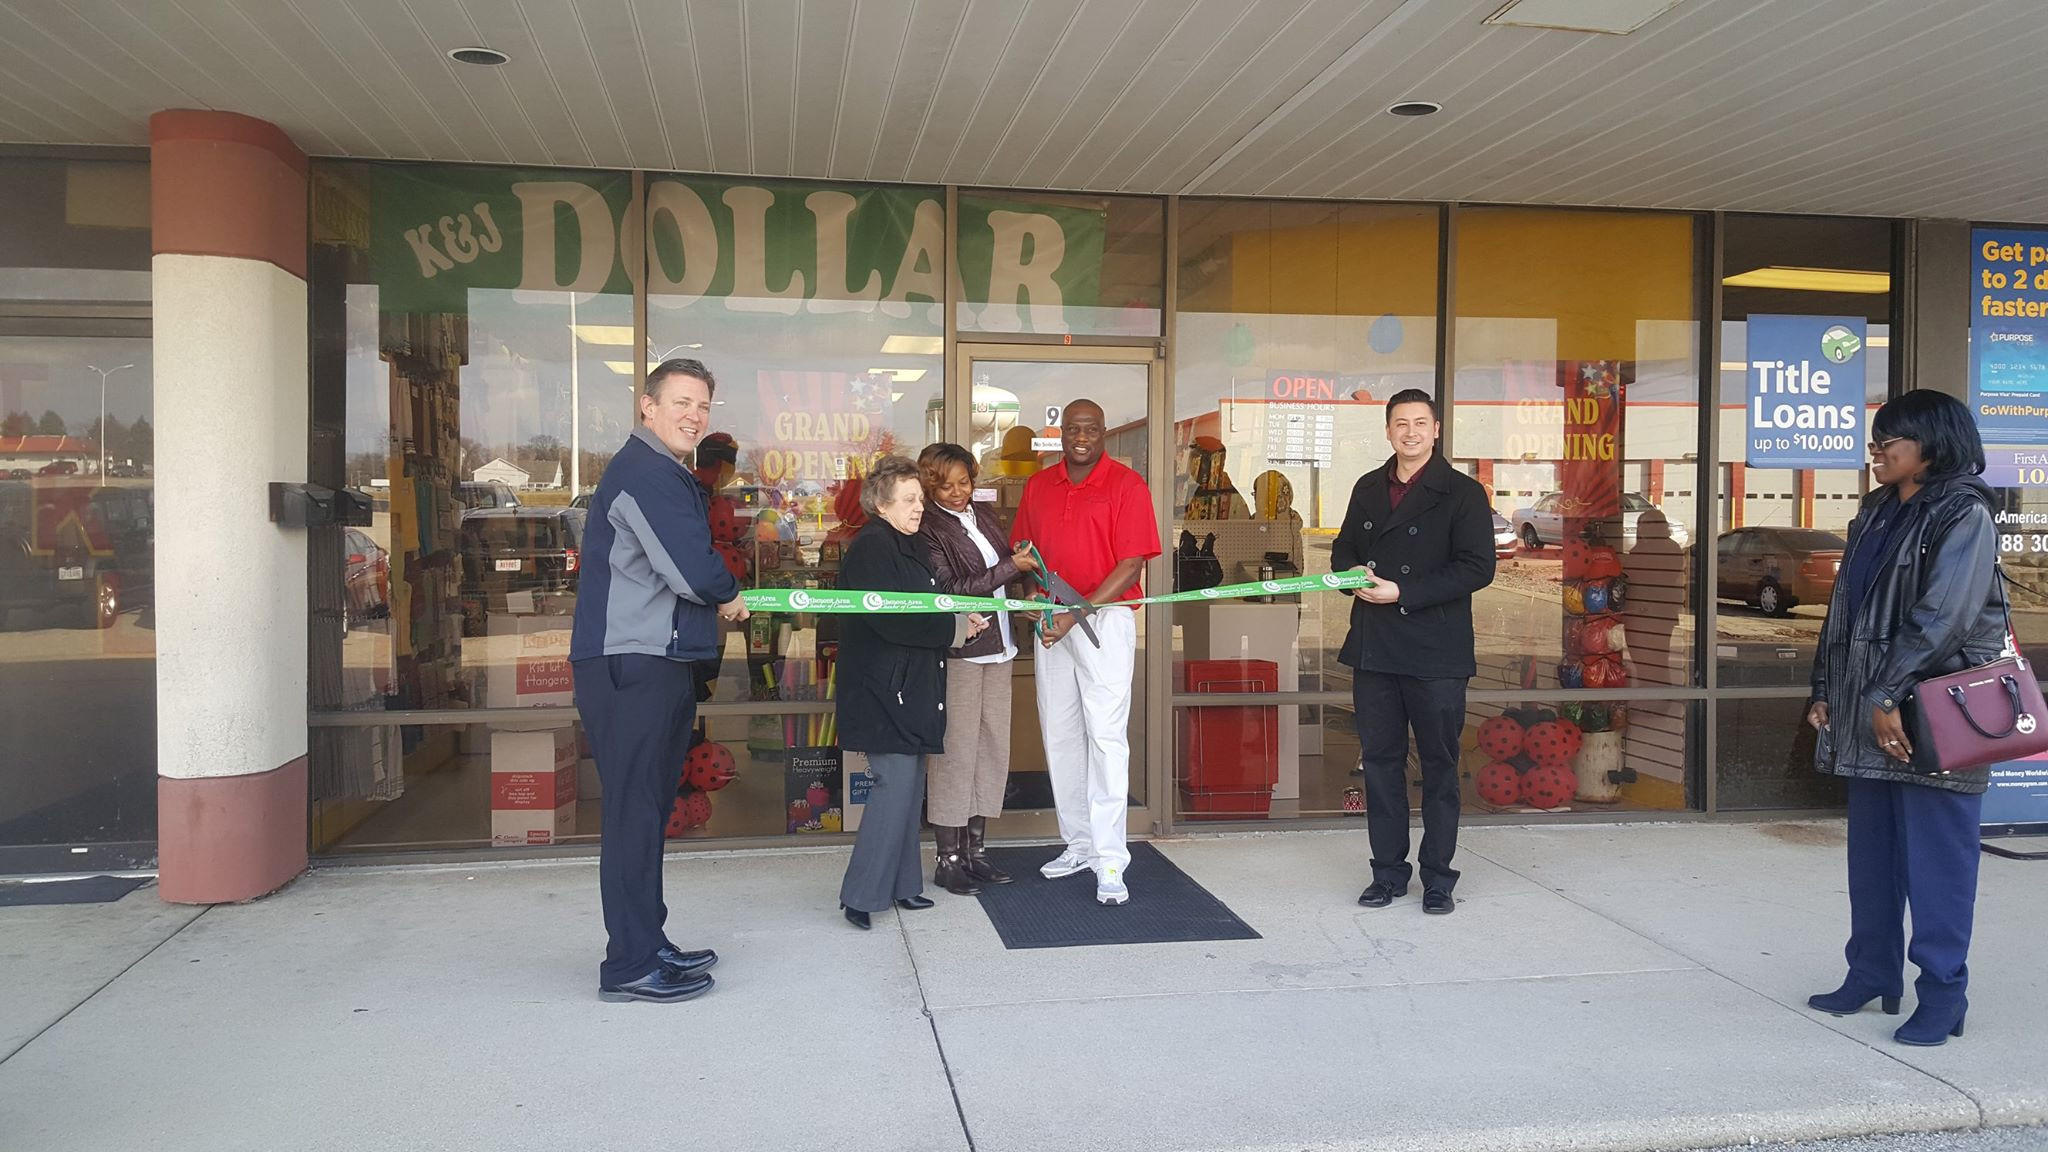 K&J Dollar Store Grand Opening